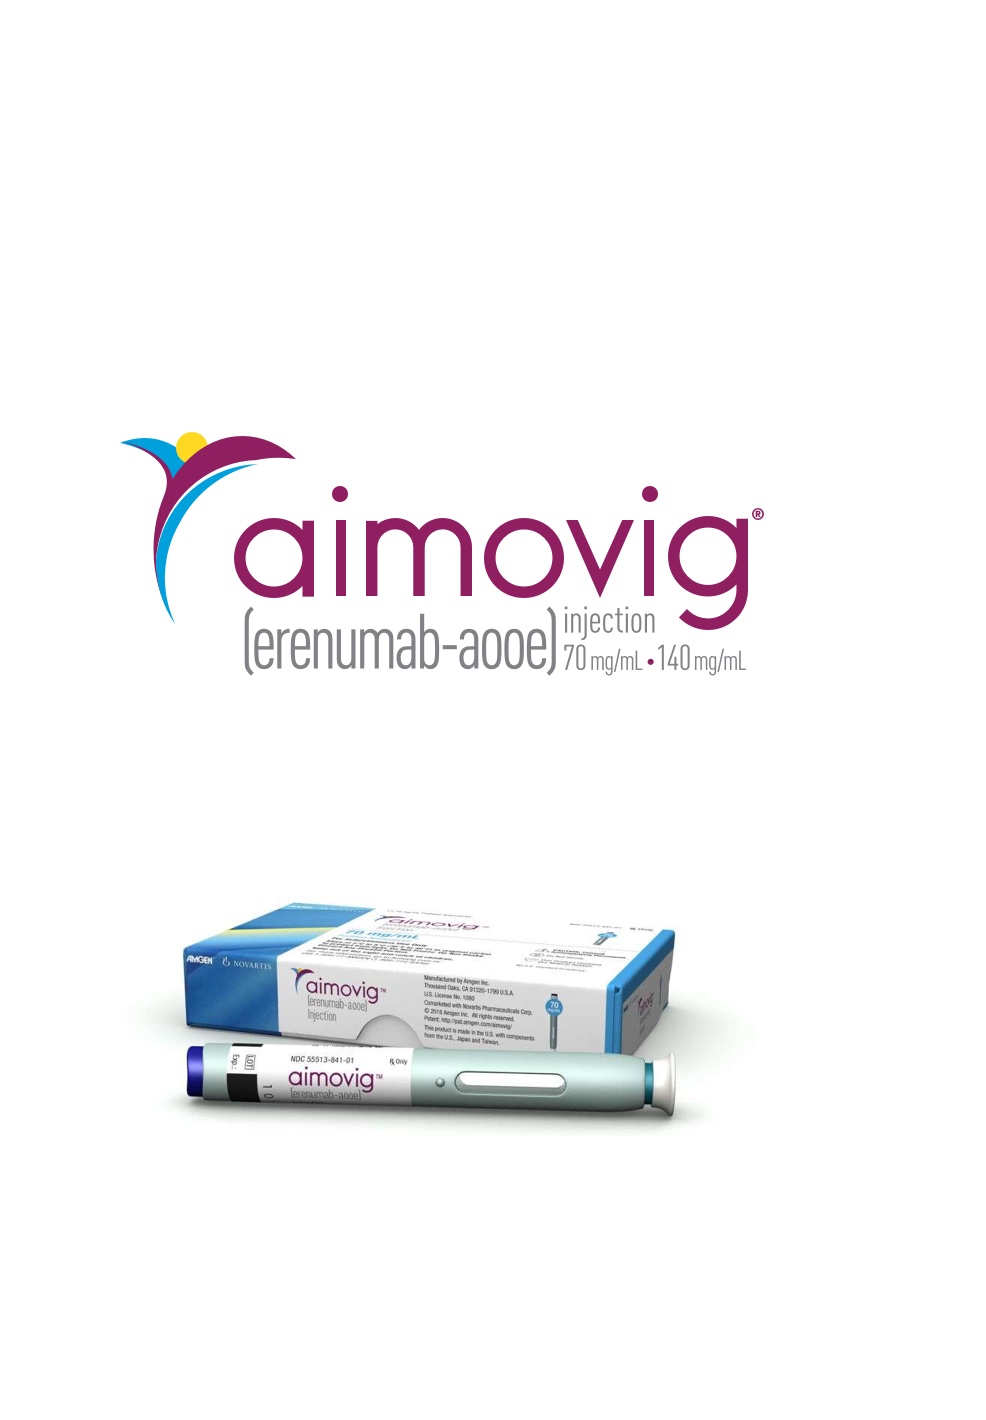 Aimovig, the new migraine treatment